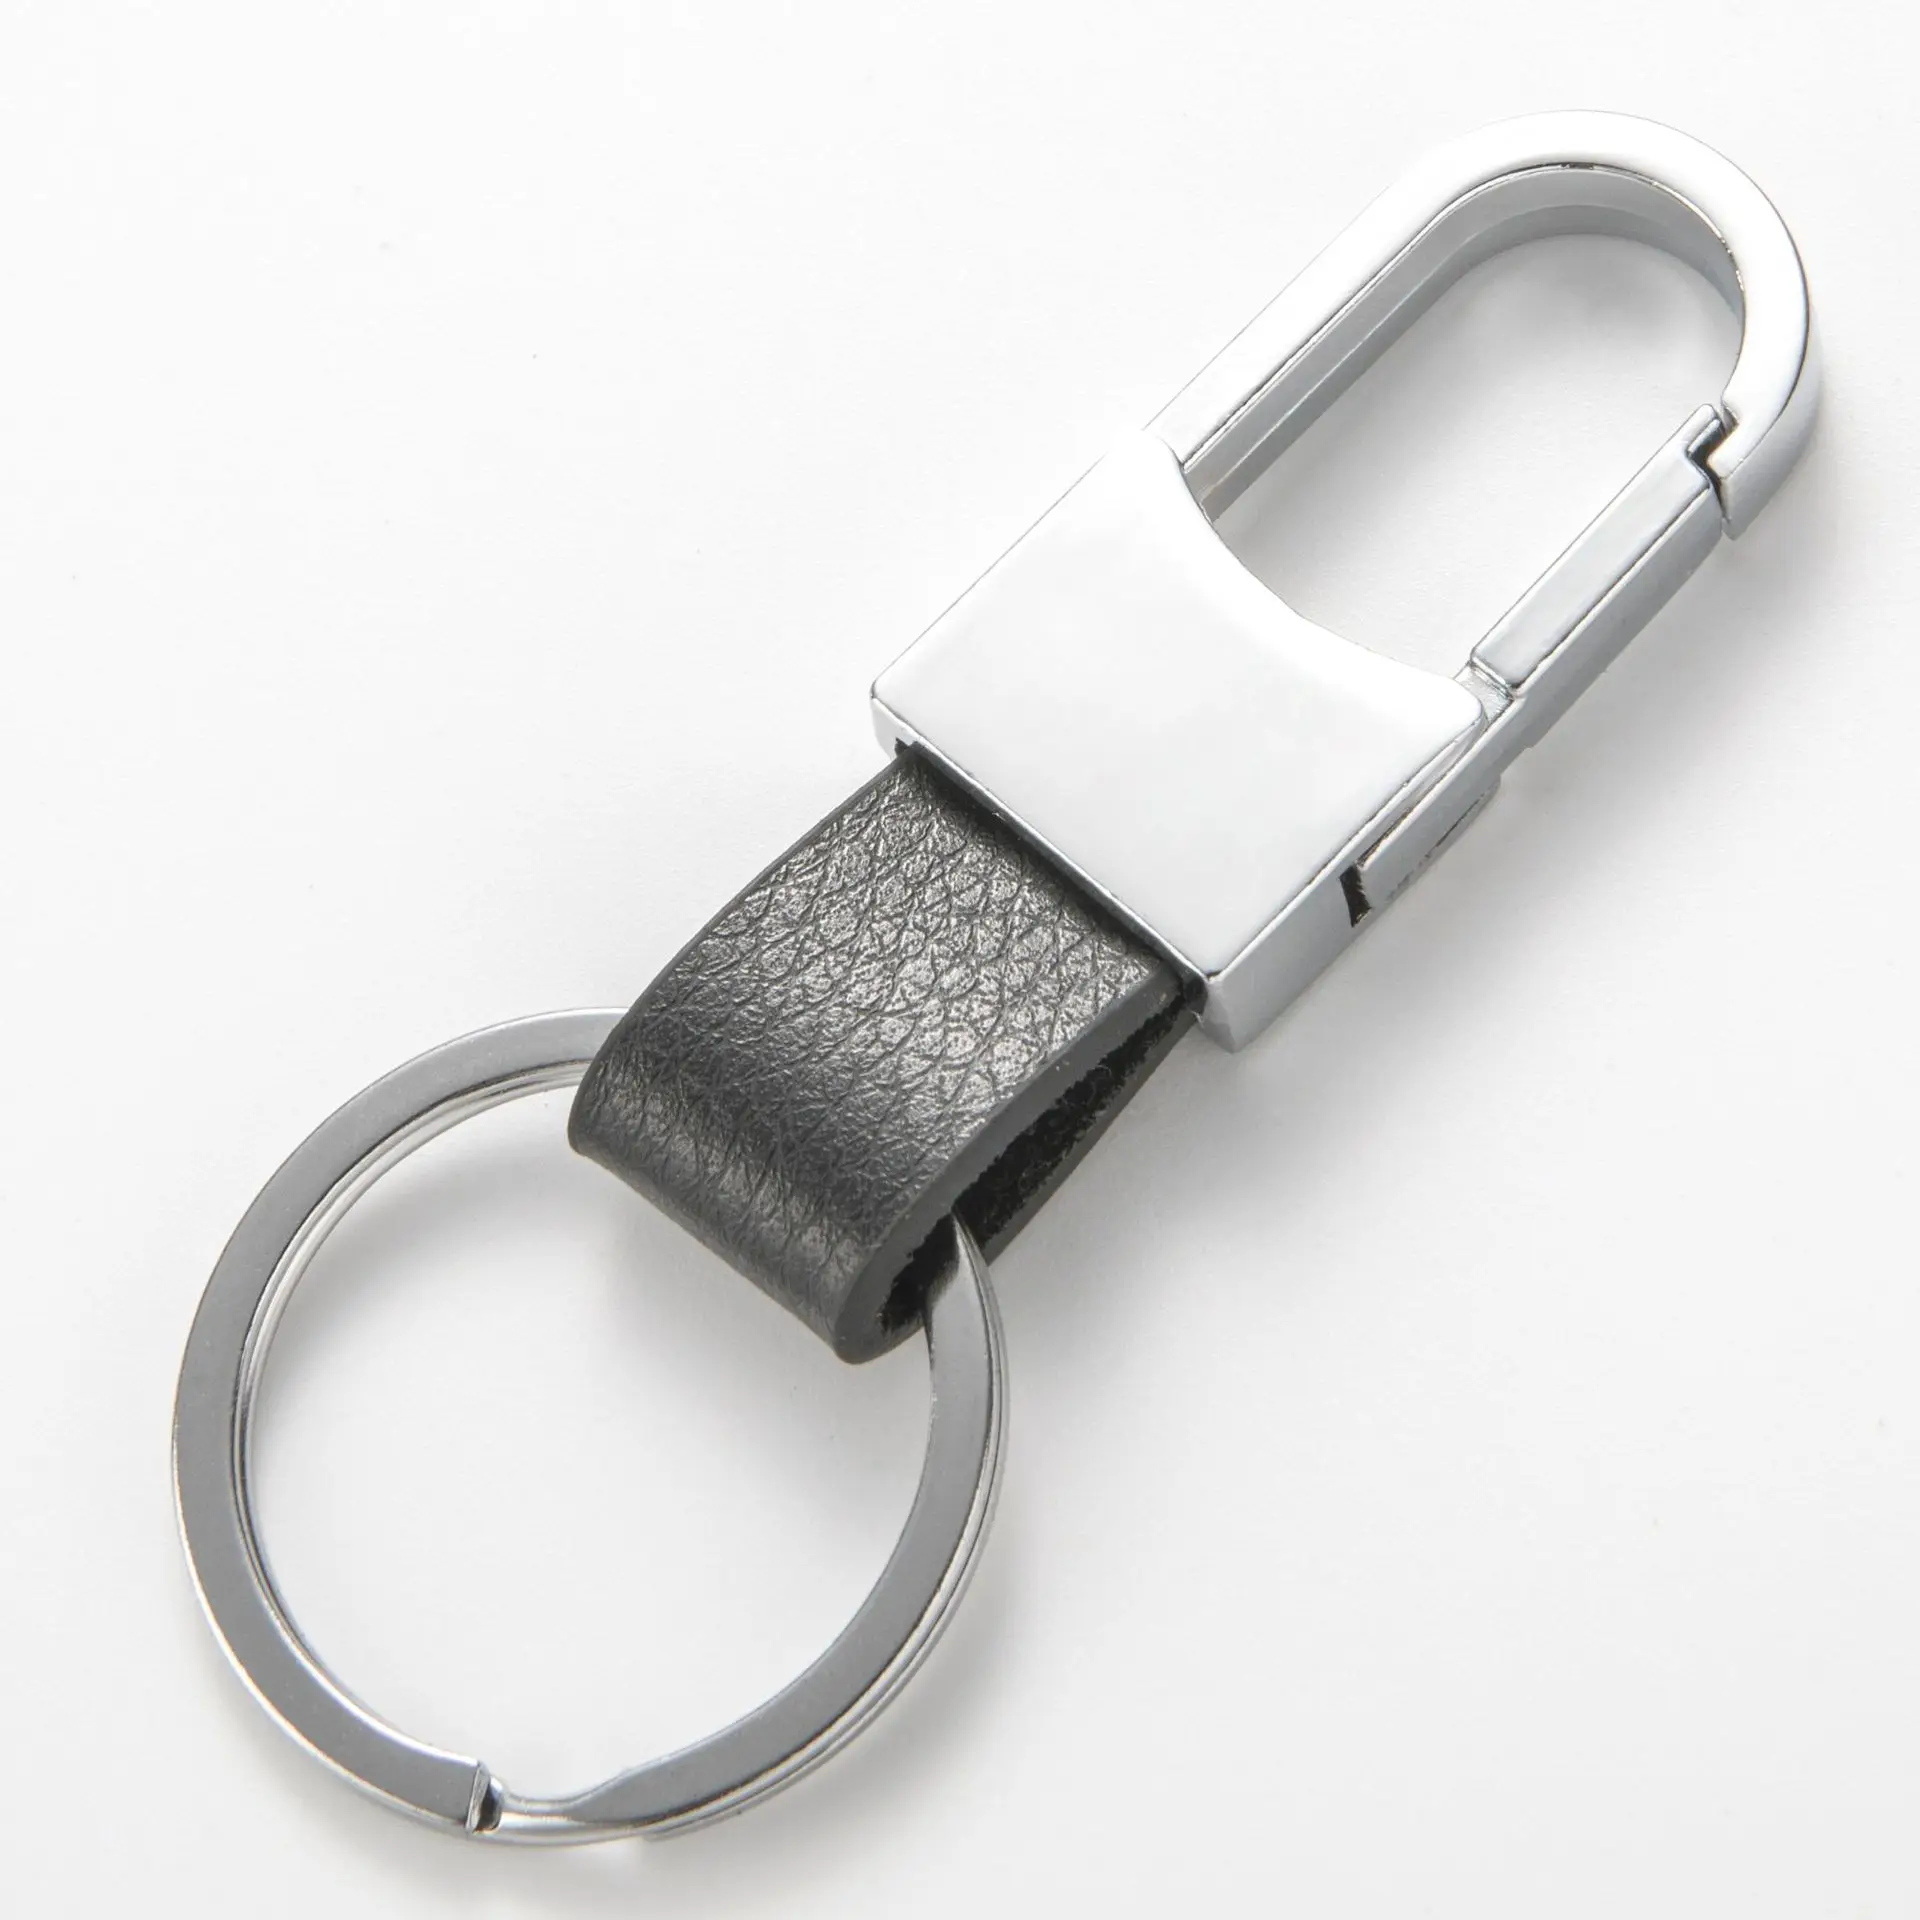 Philley Zinc Alloy Key Chain with 2 Key Rings Heavy Duty Car Business Keychain for Men & Women 